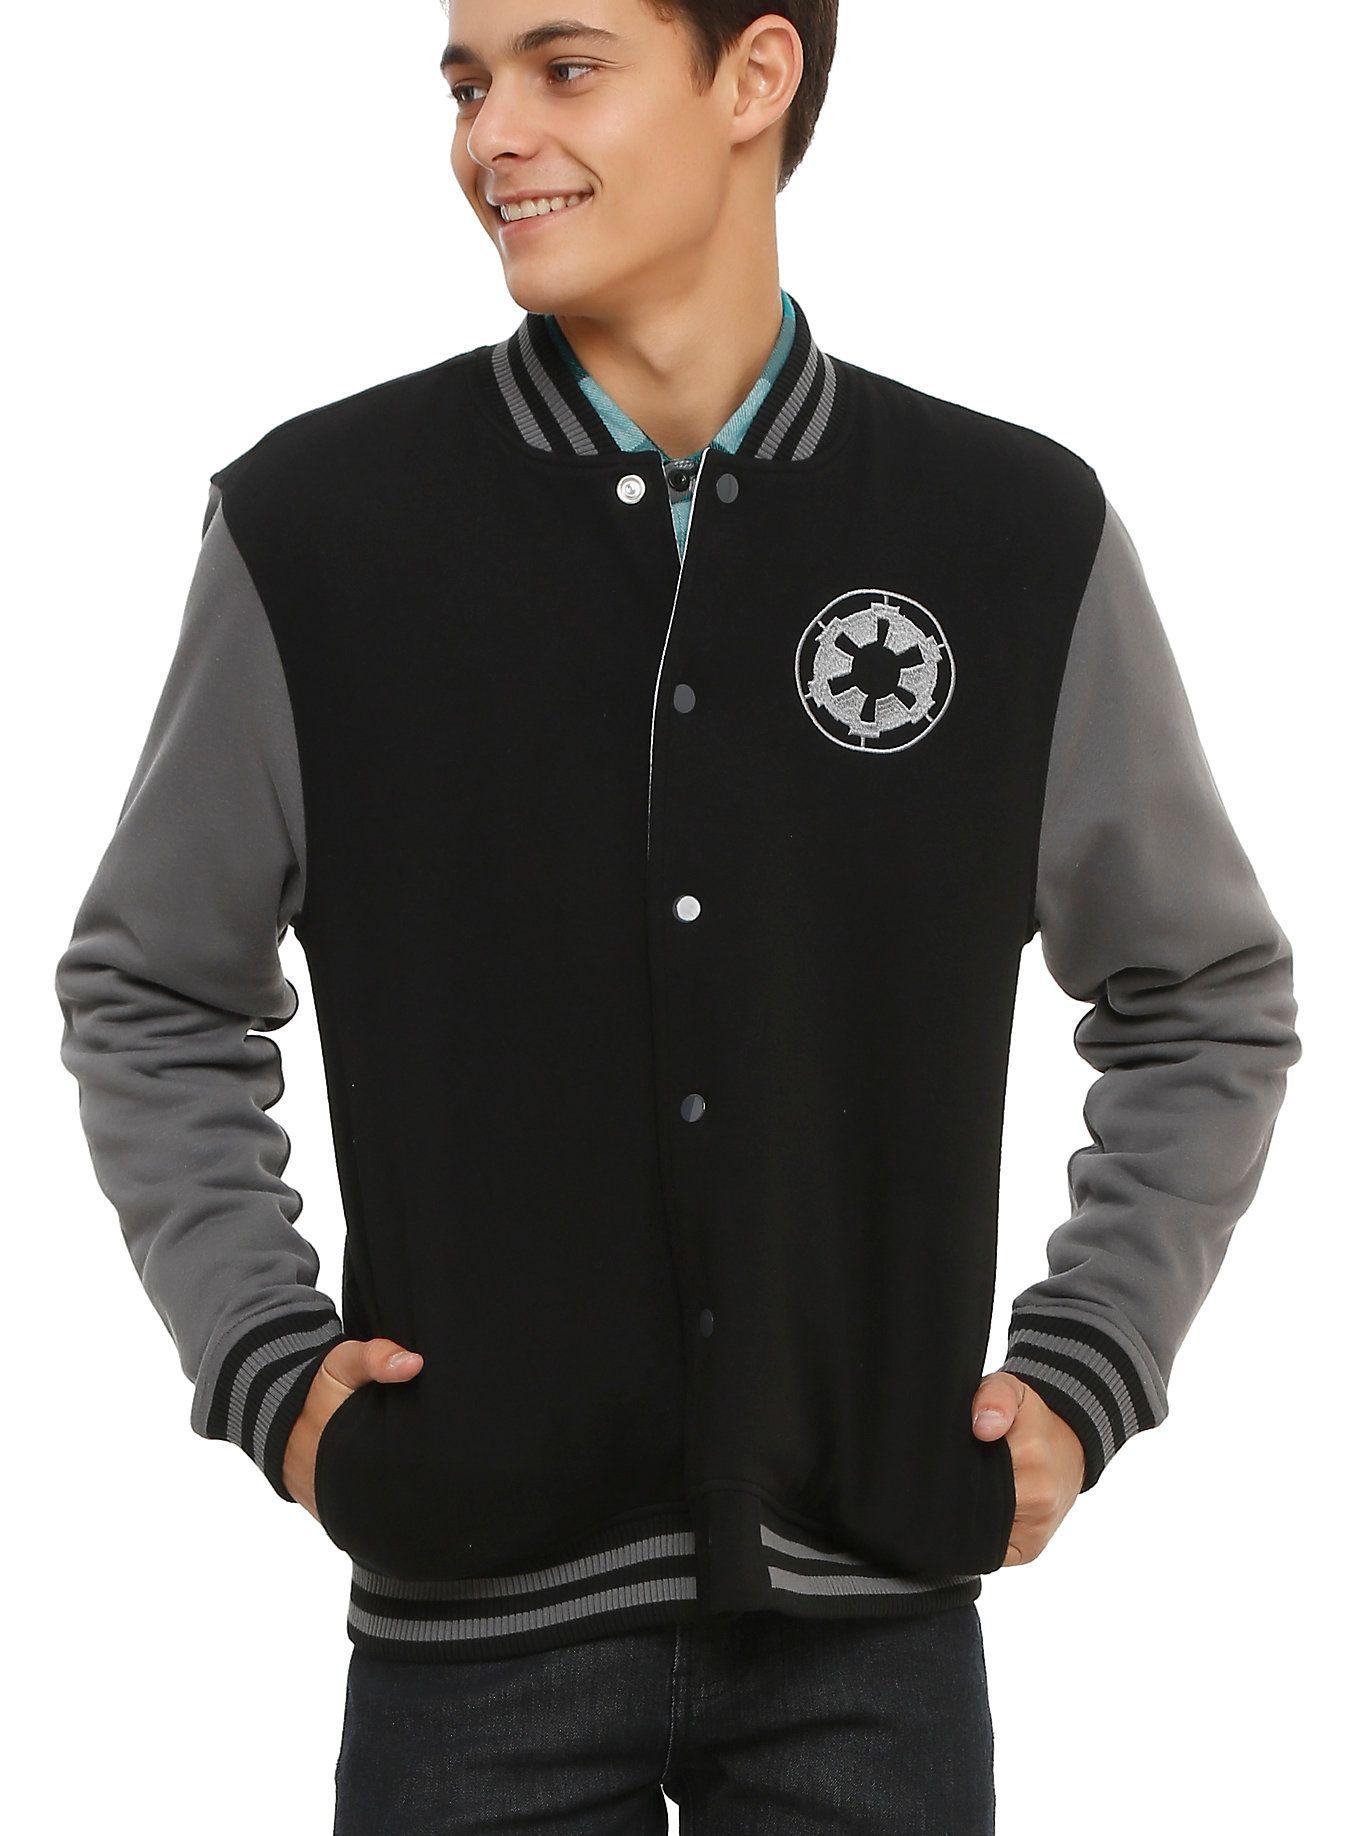 Imperial Clothing Logo - Star Wars Imperial/Rebel Reversible Varsity Jacket | Clothes ...